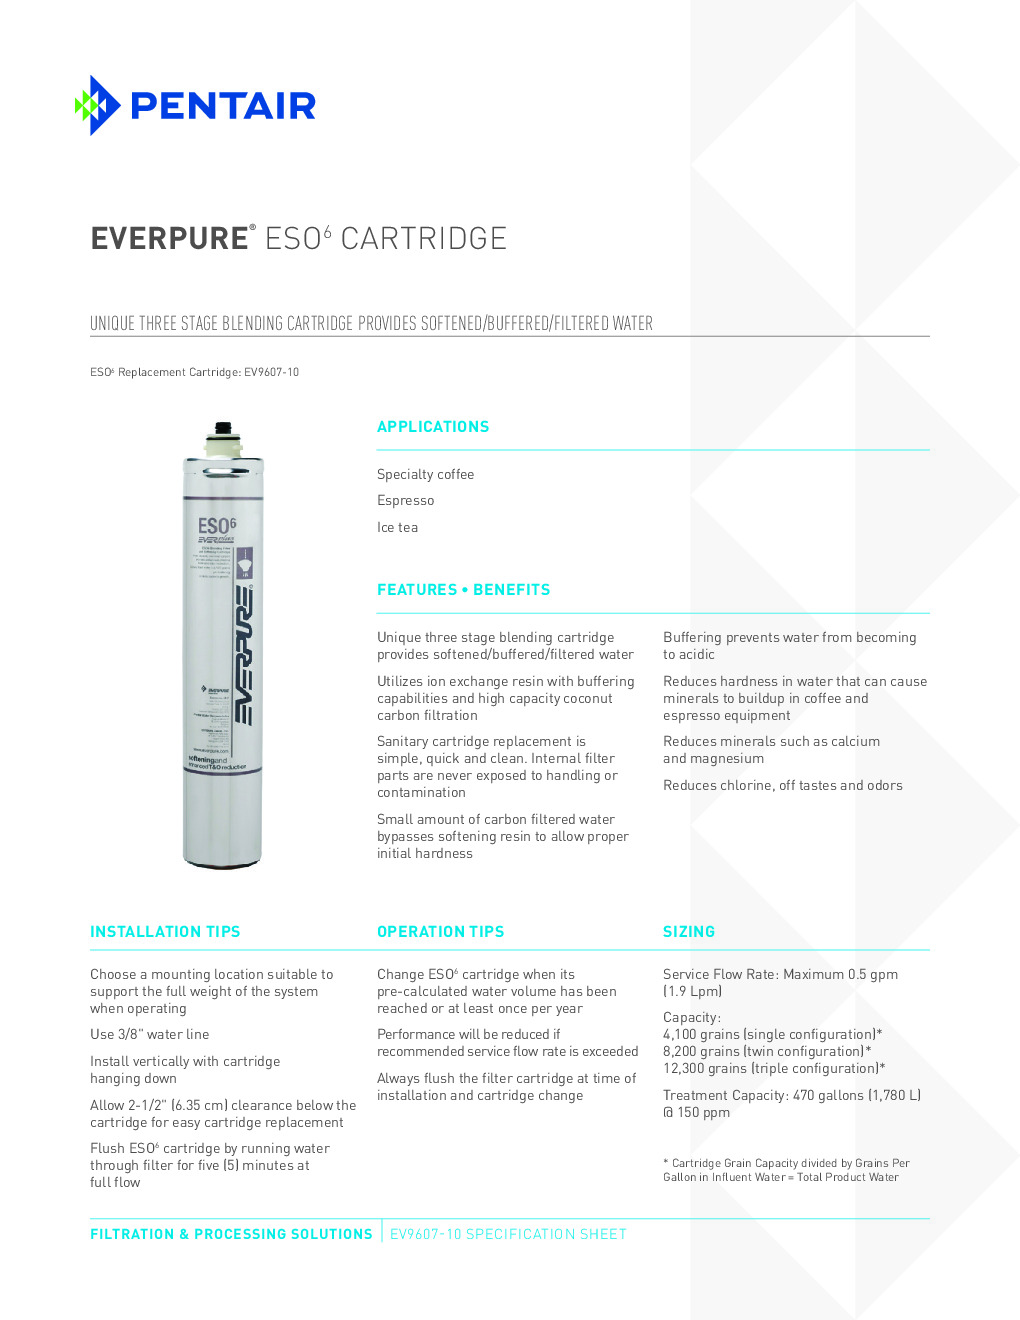 Everpure EV960710 Cartridge Water Softener Conditioner